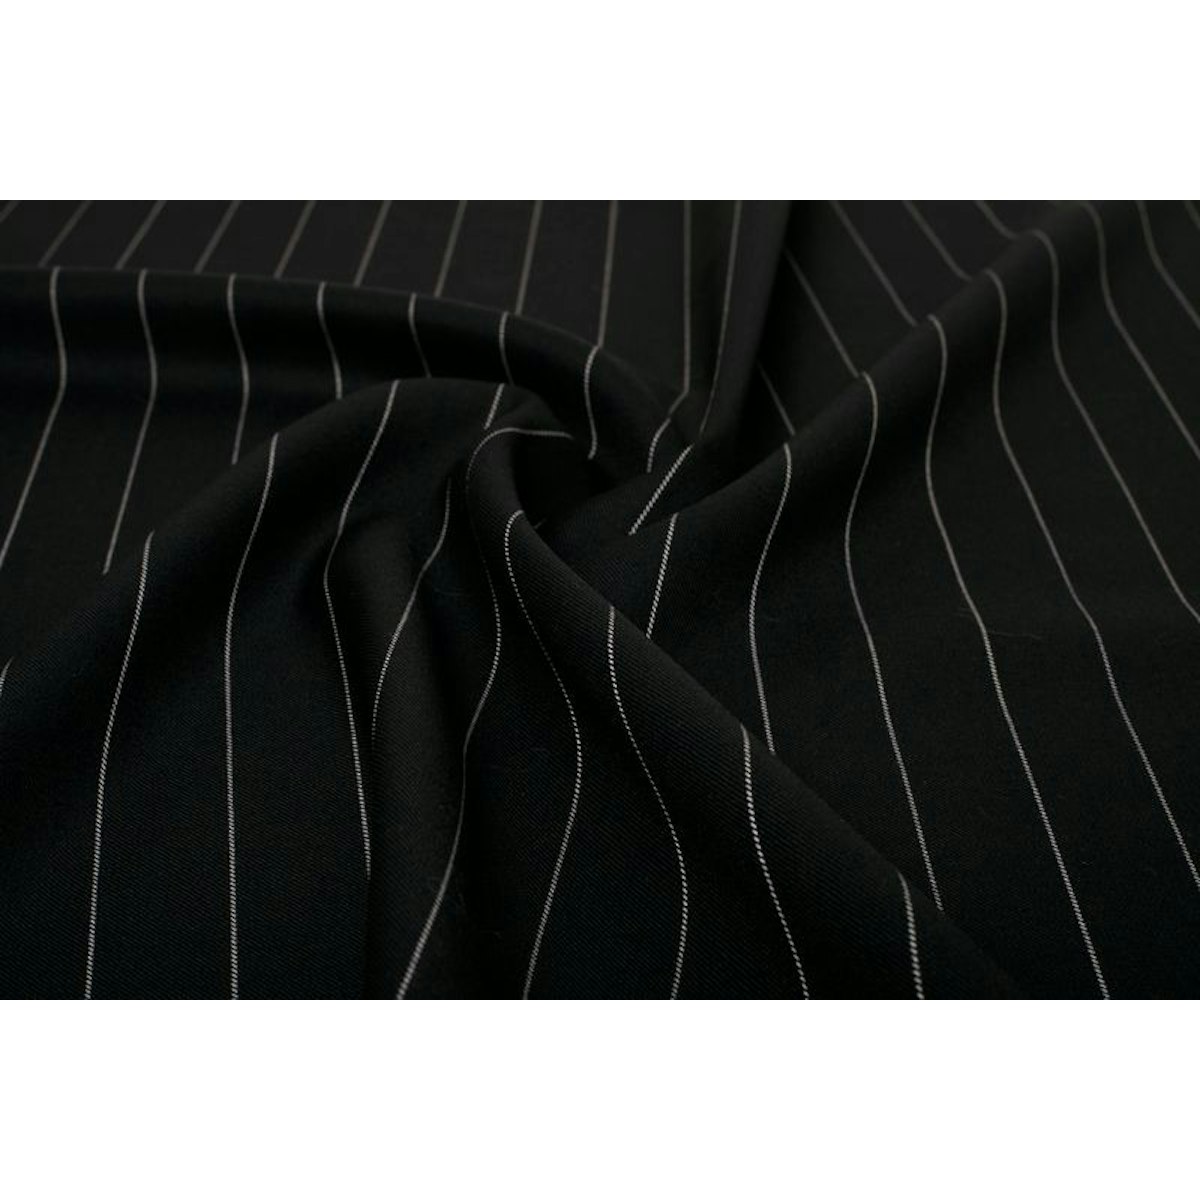 InStitchu Suit Fabric 146